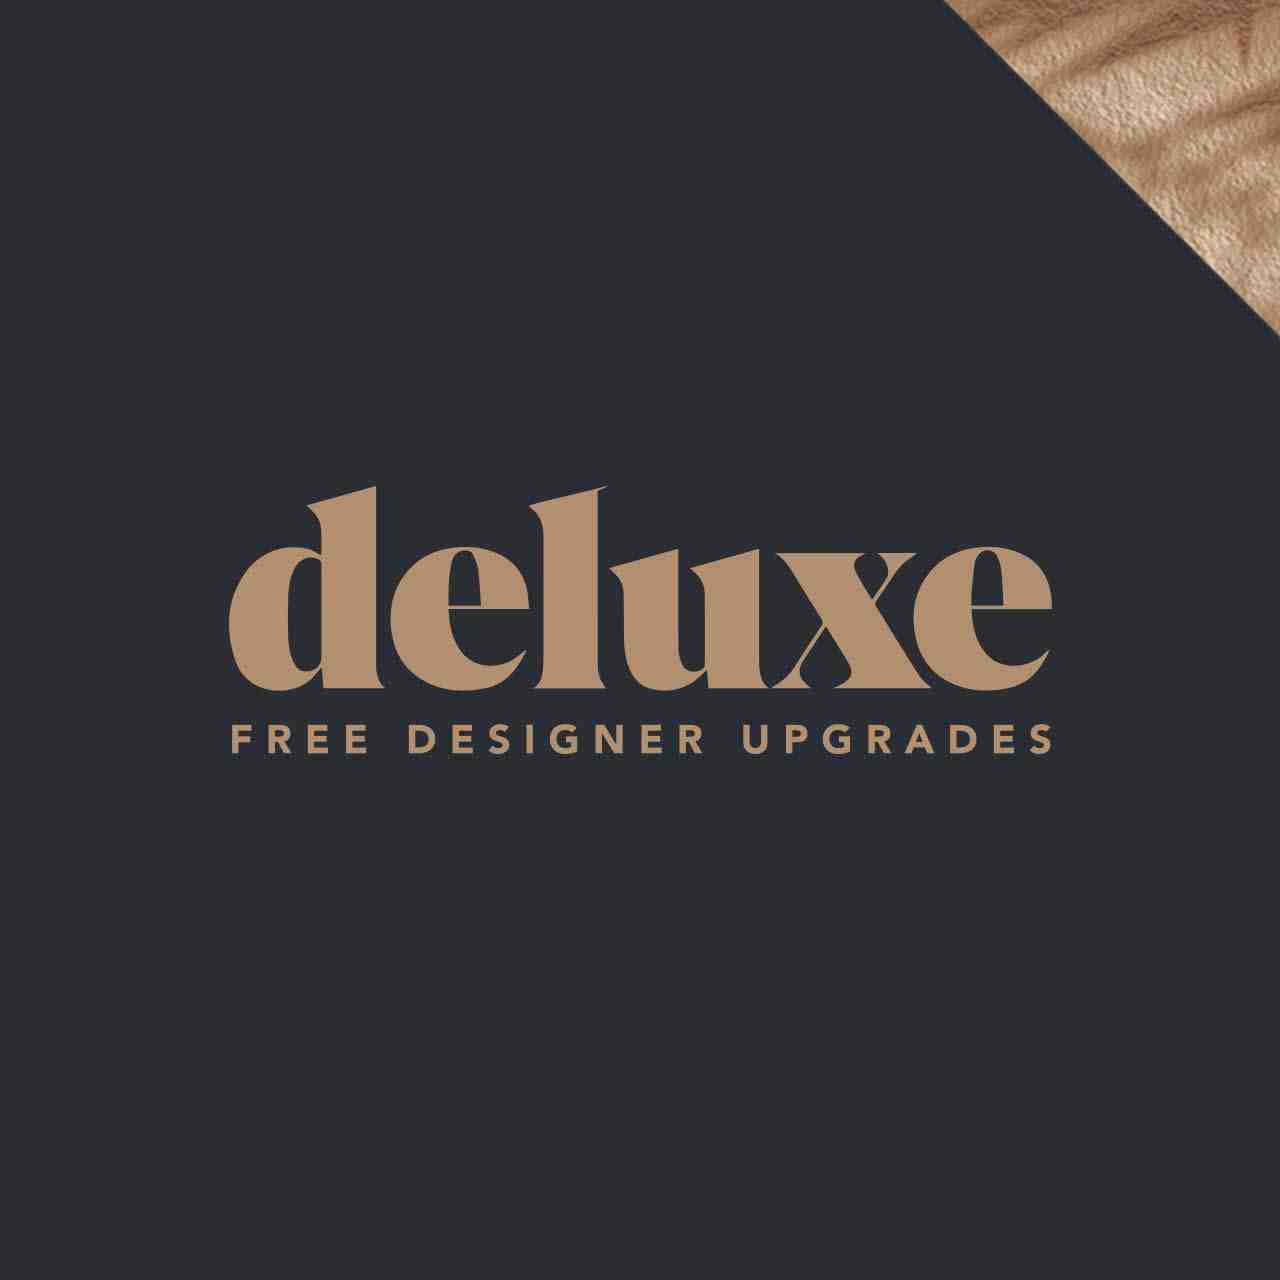 Deluxe Free Designer Upgrades